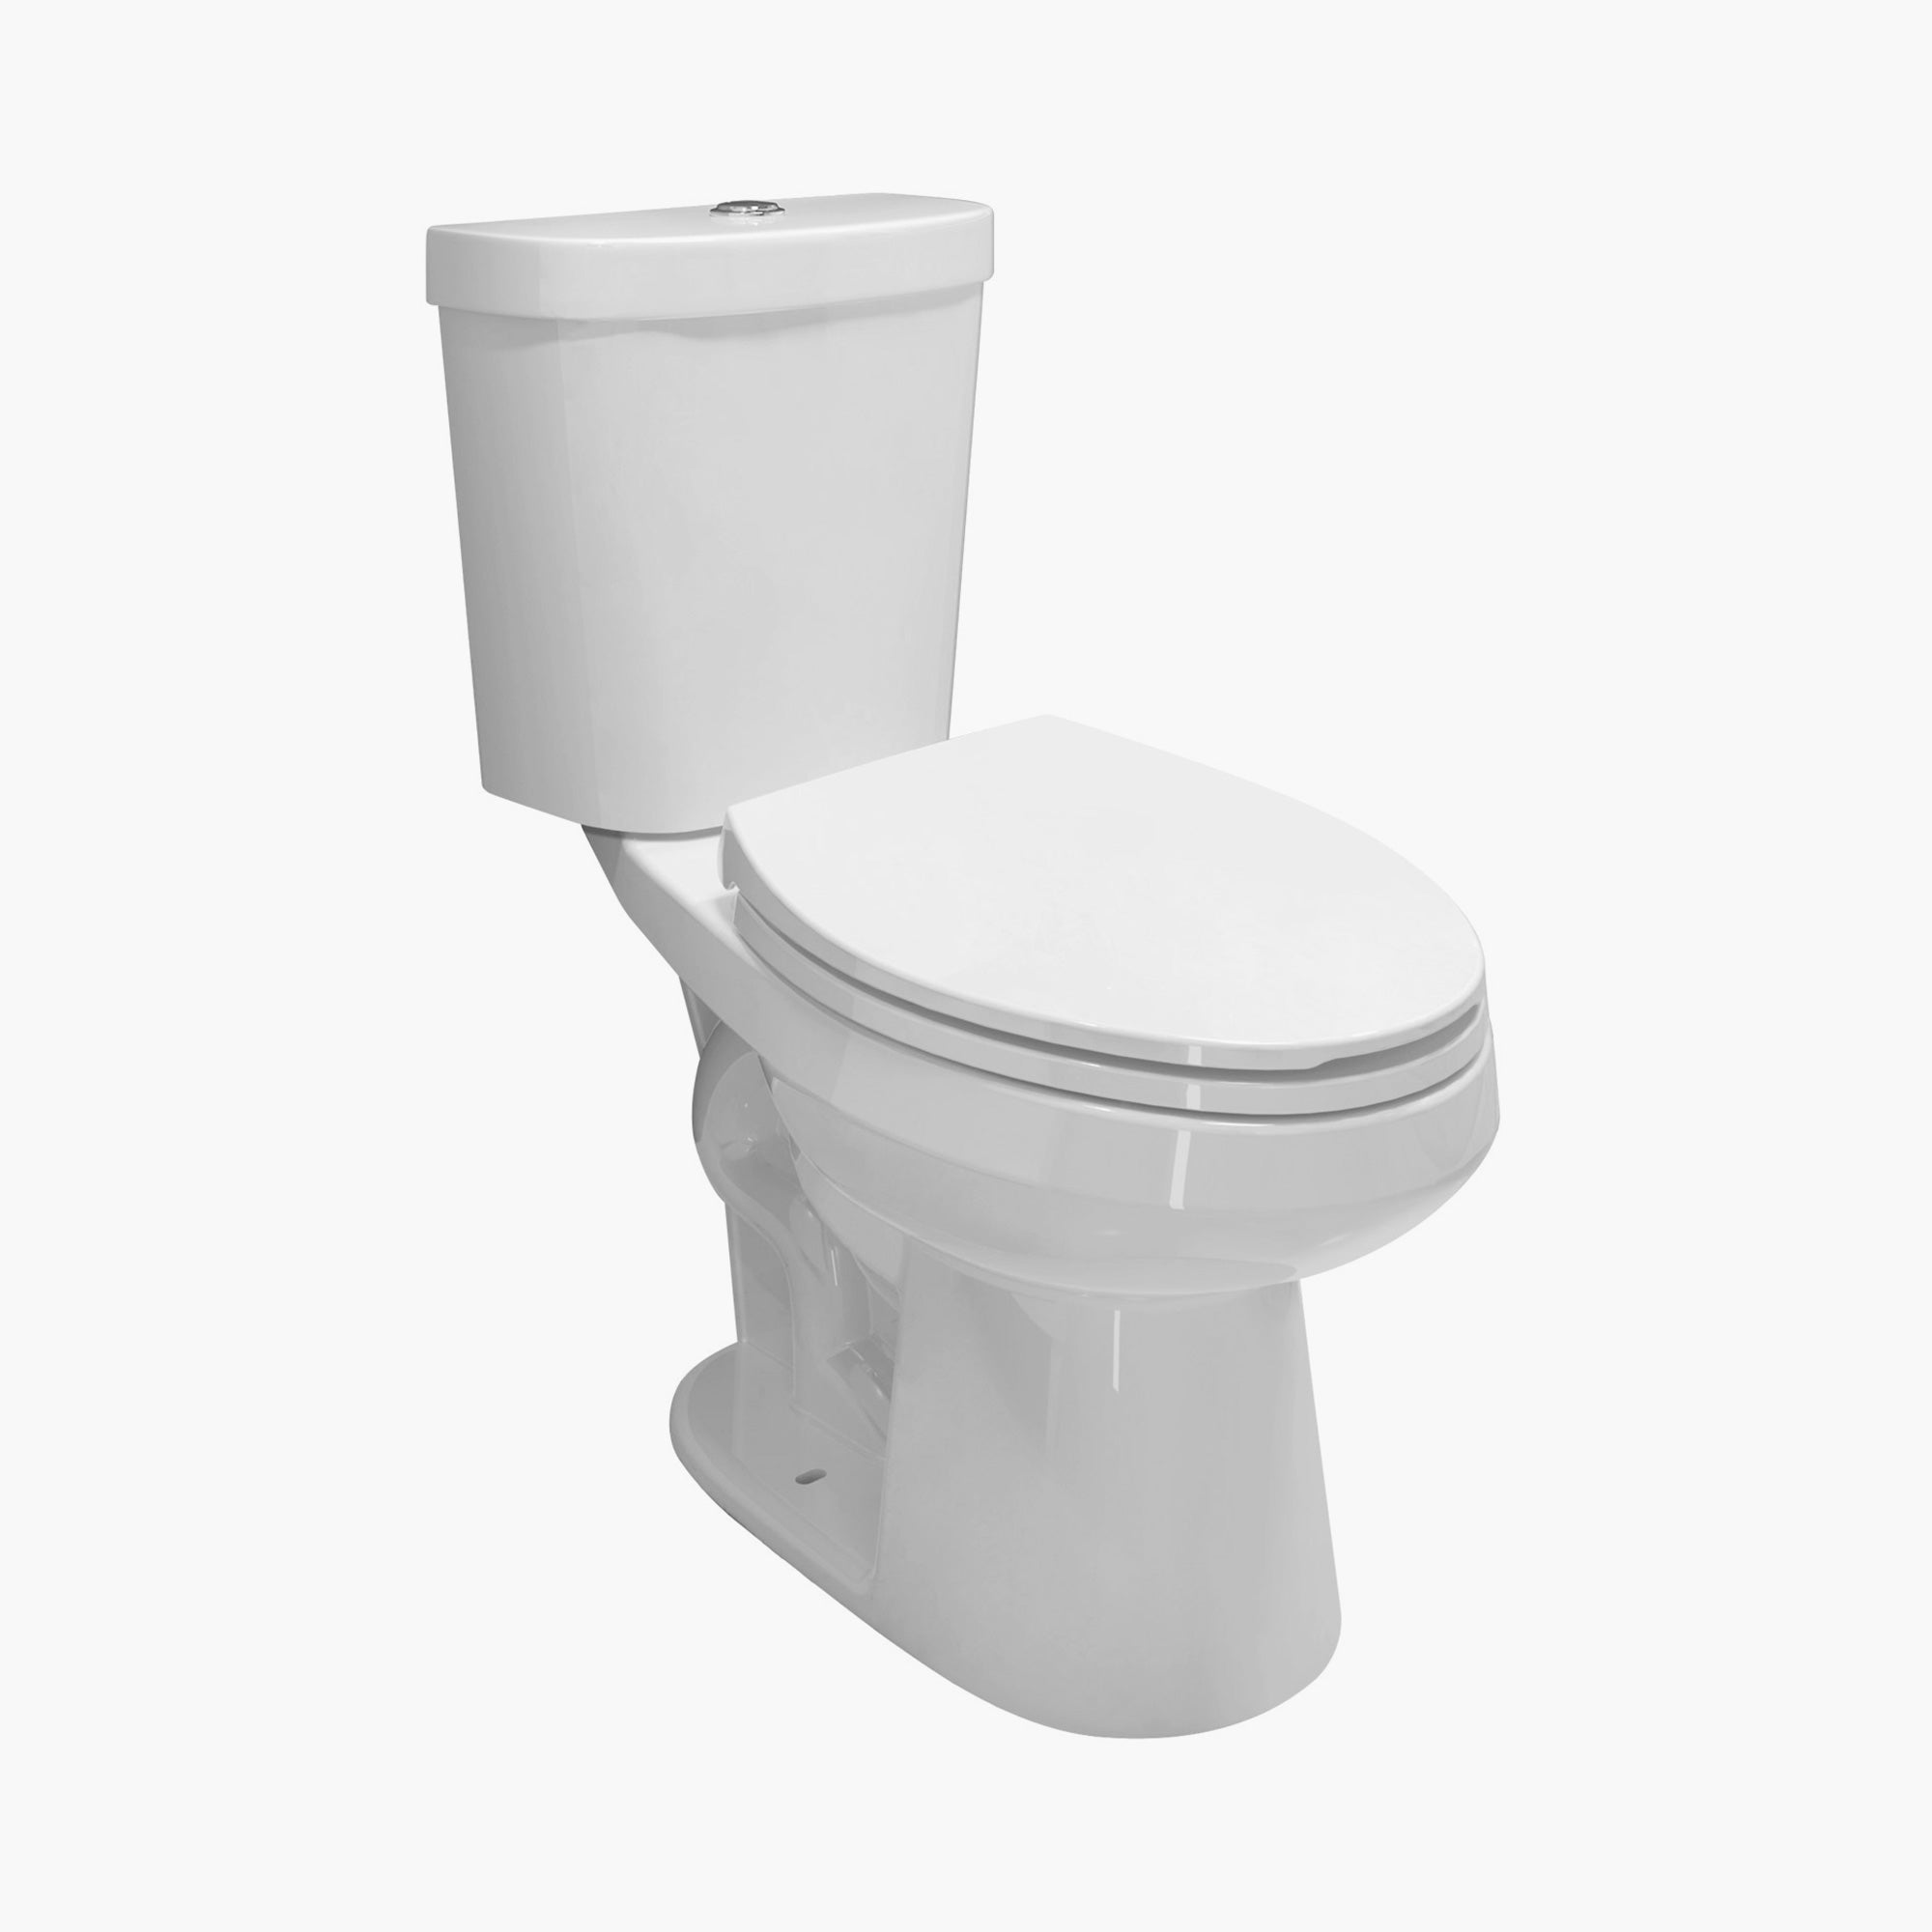 HOROW Elongated Bowl 1.1 OR 1.6 GPF Dual Flush Two Piece Toilet Model HWTT-E01D